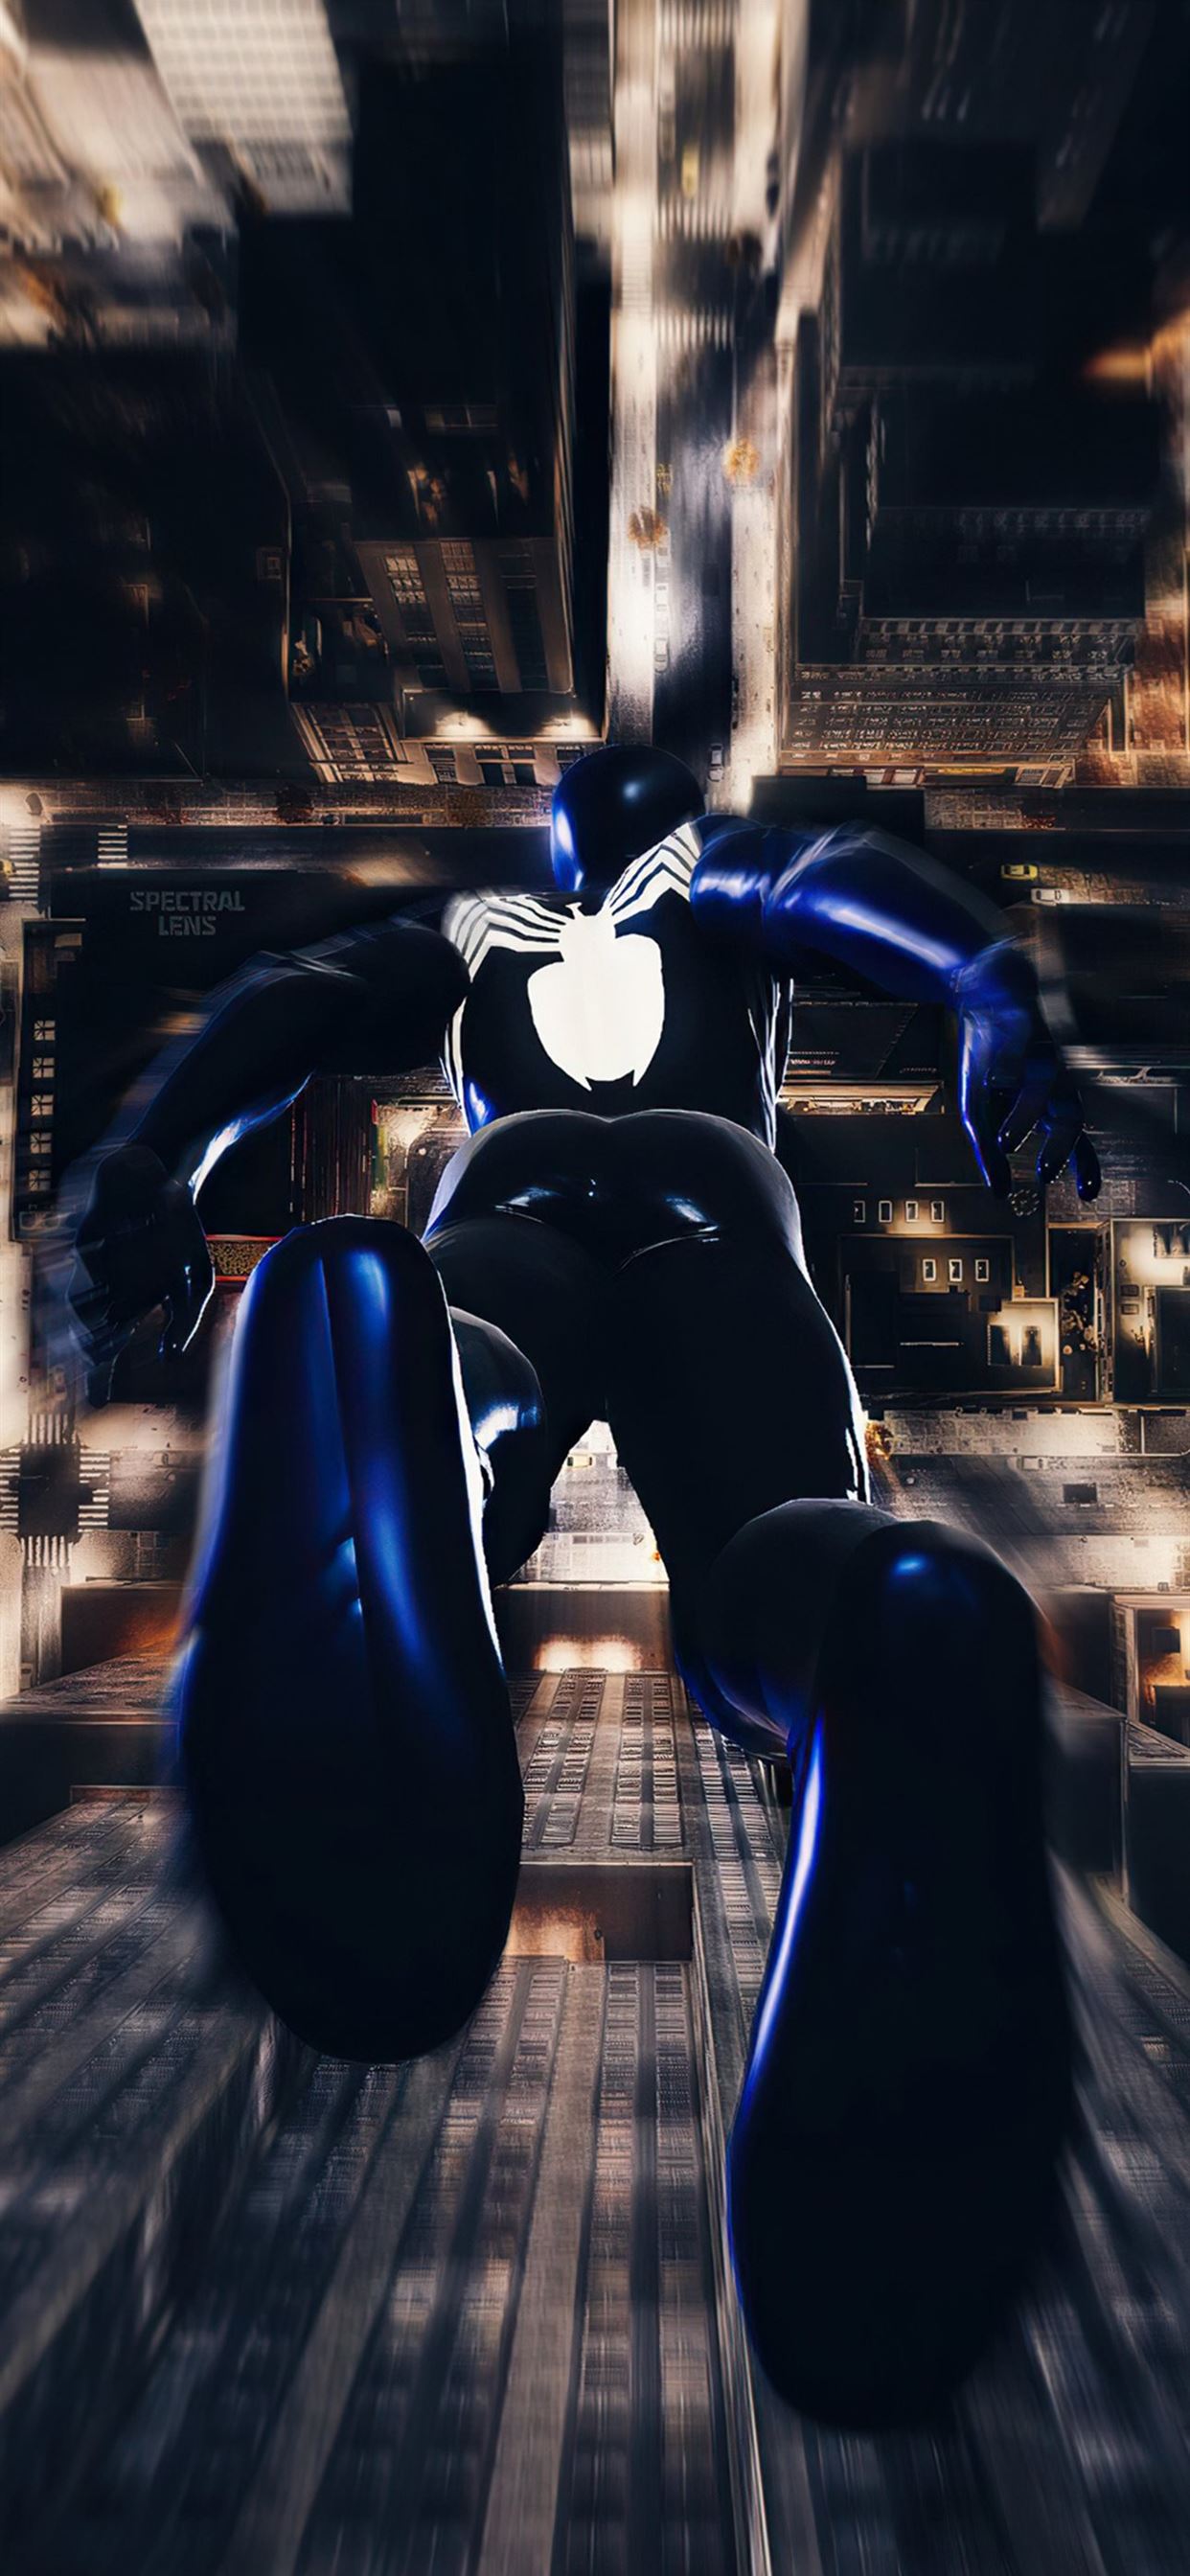 SpiderMan Symbiote Suit Marvel Comics 4K wallpaper download